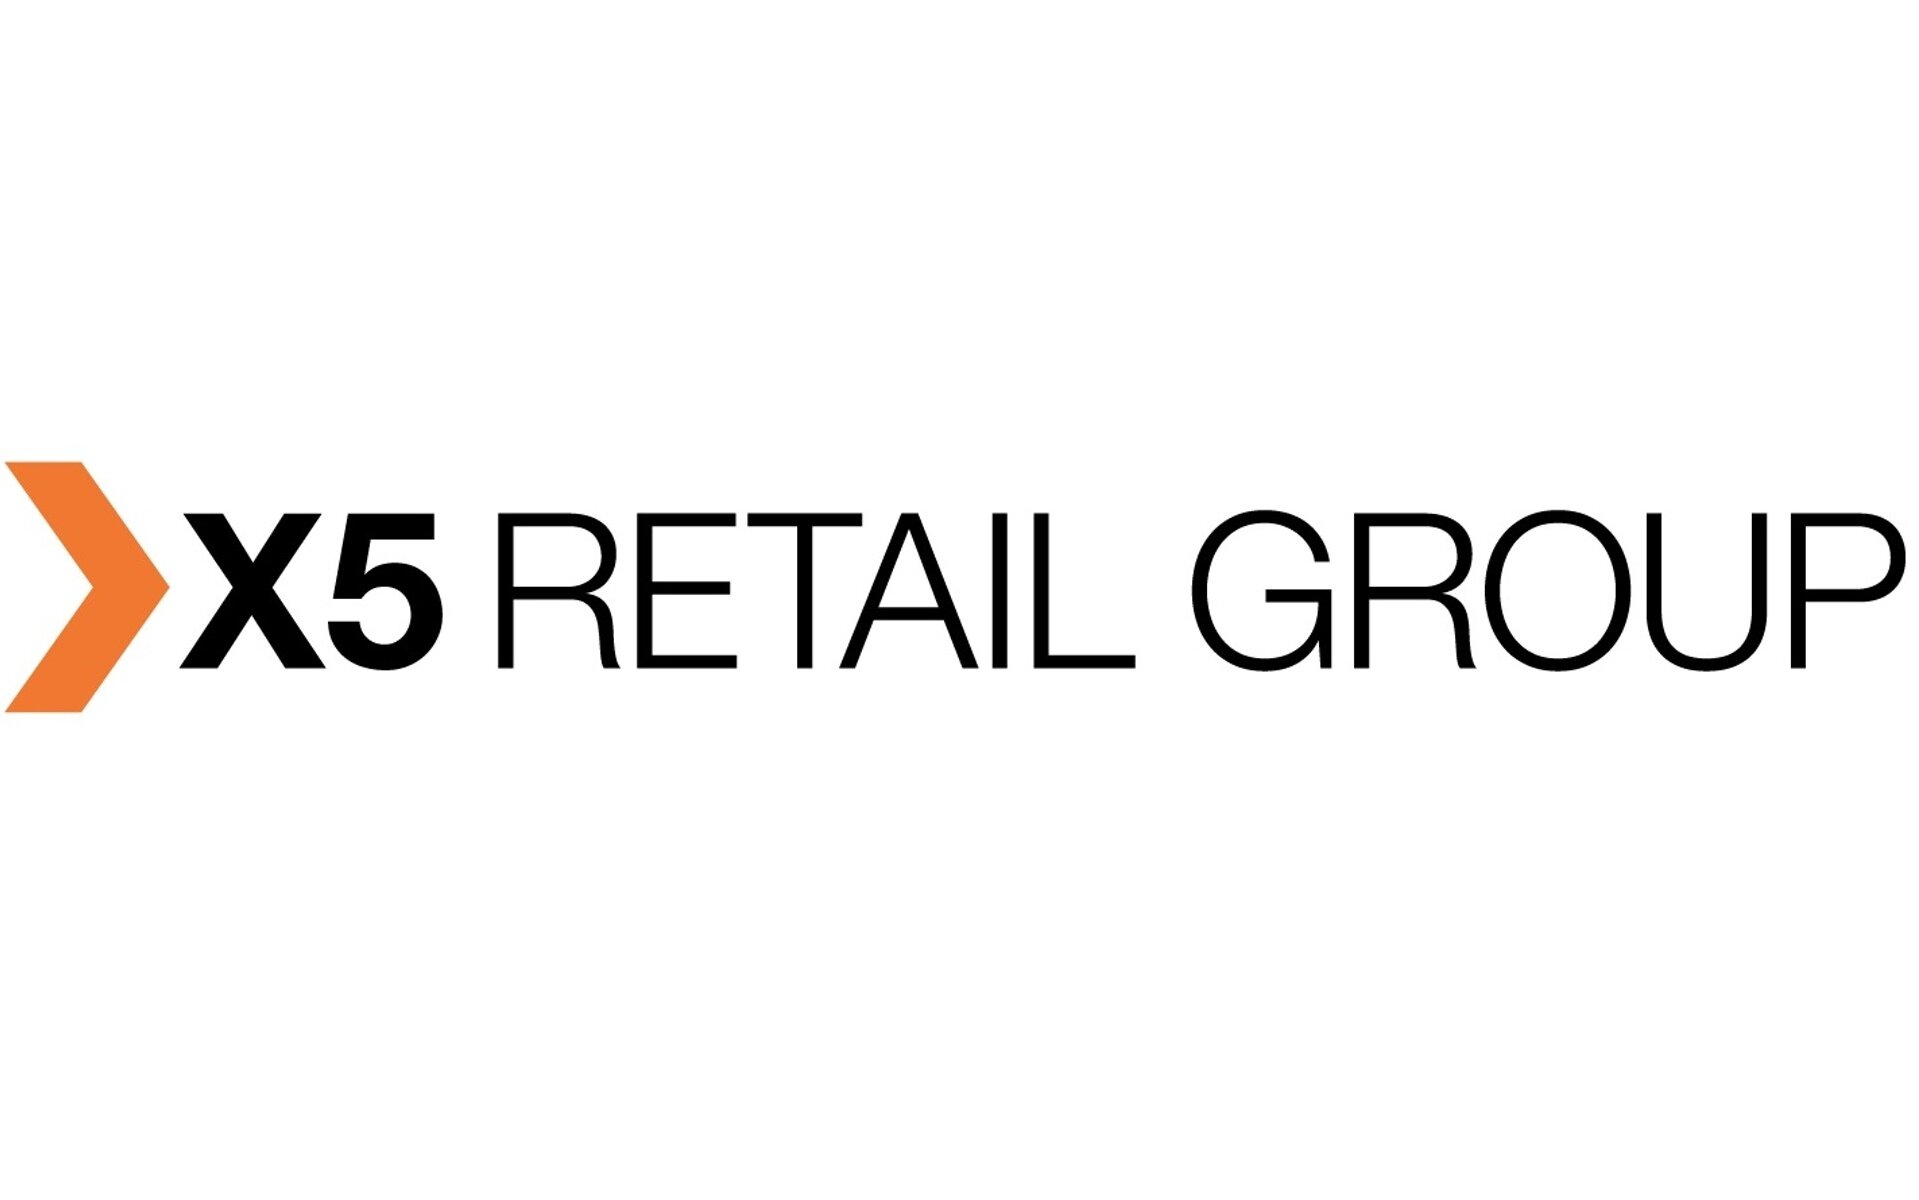 Название: X5 Retail Group